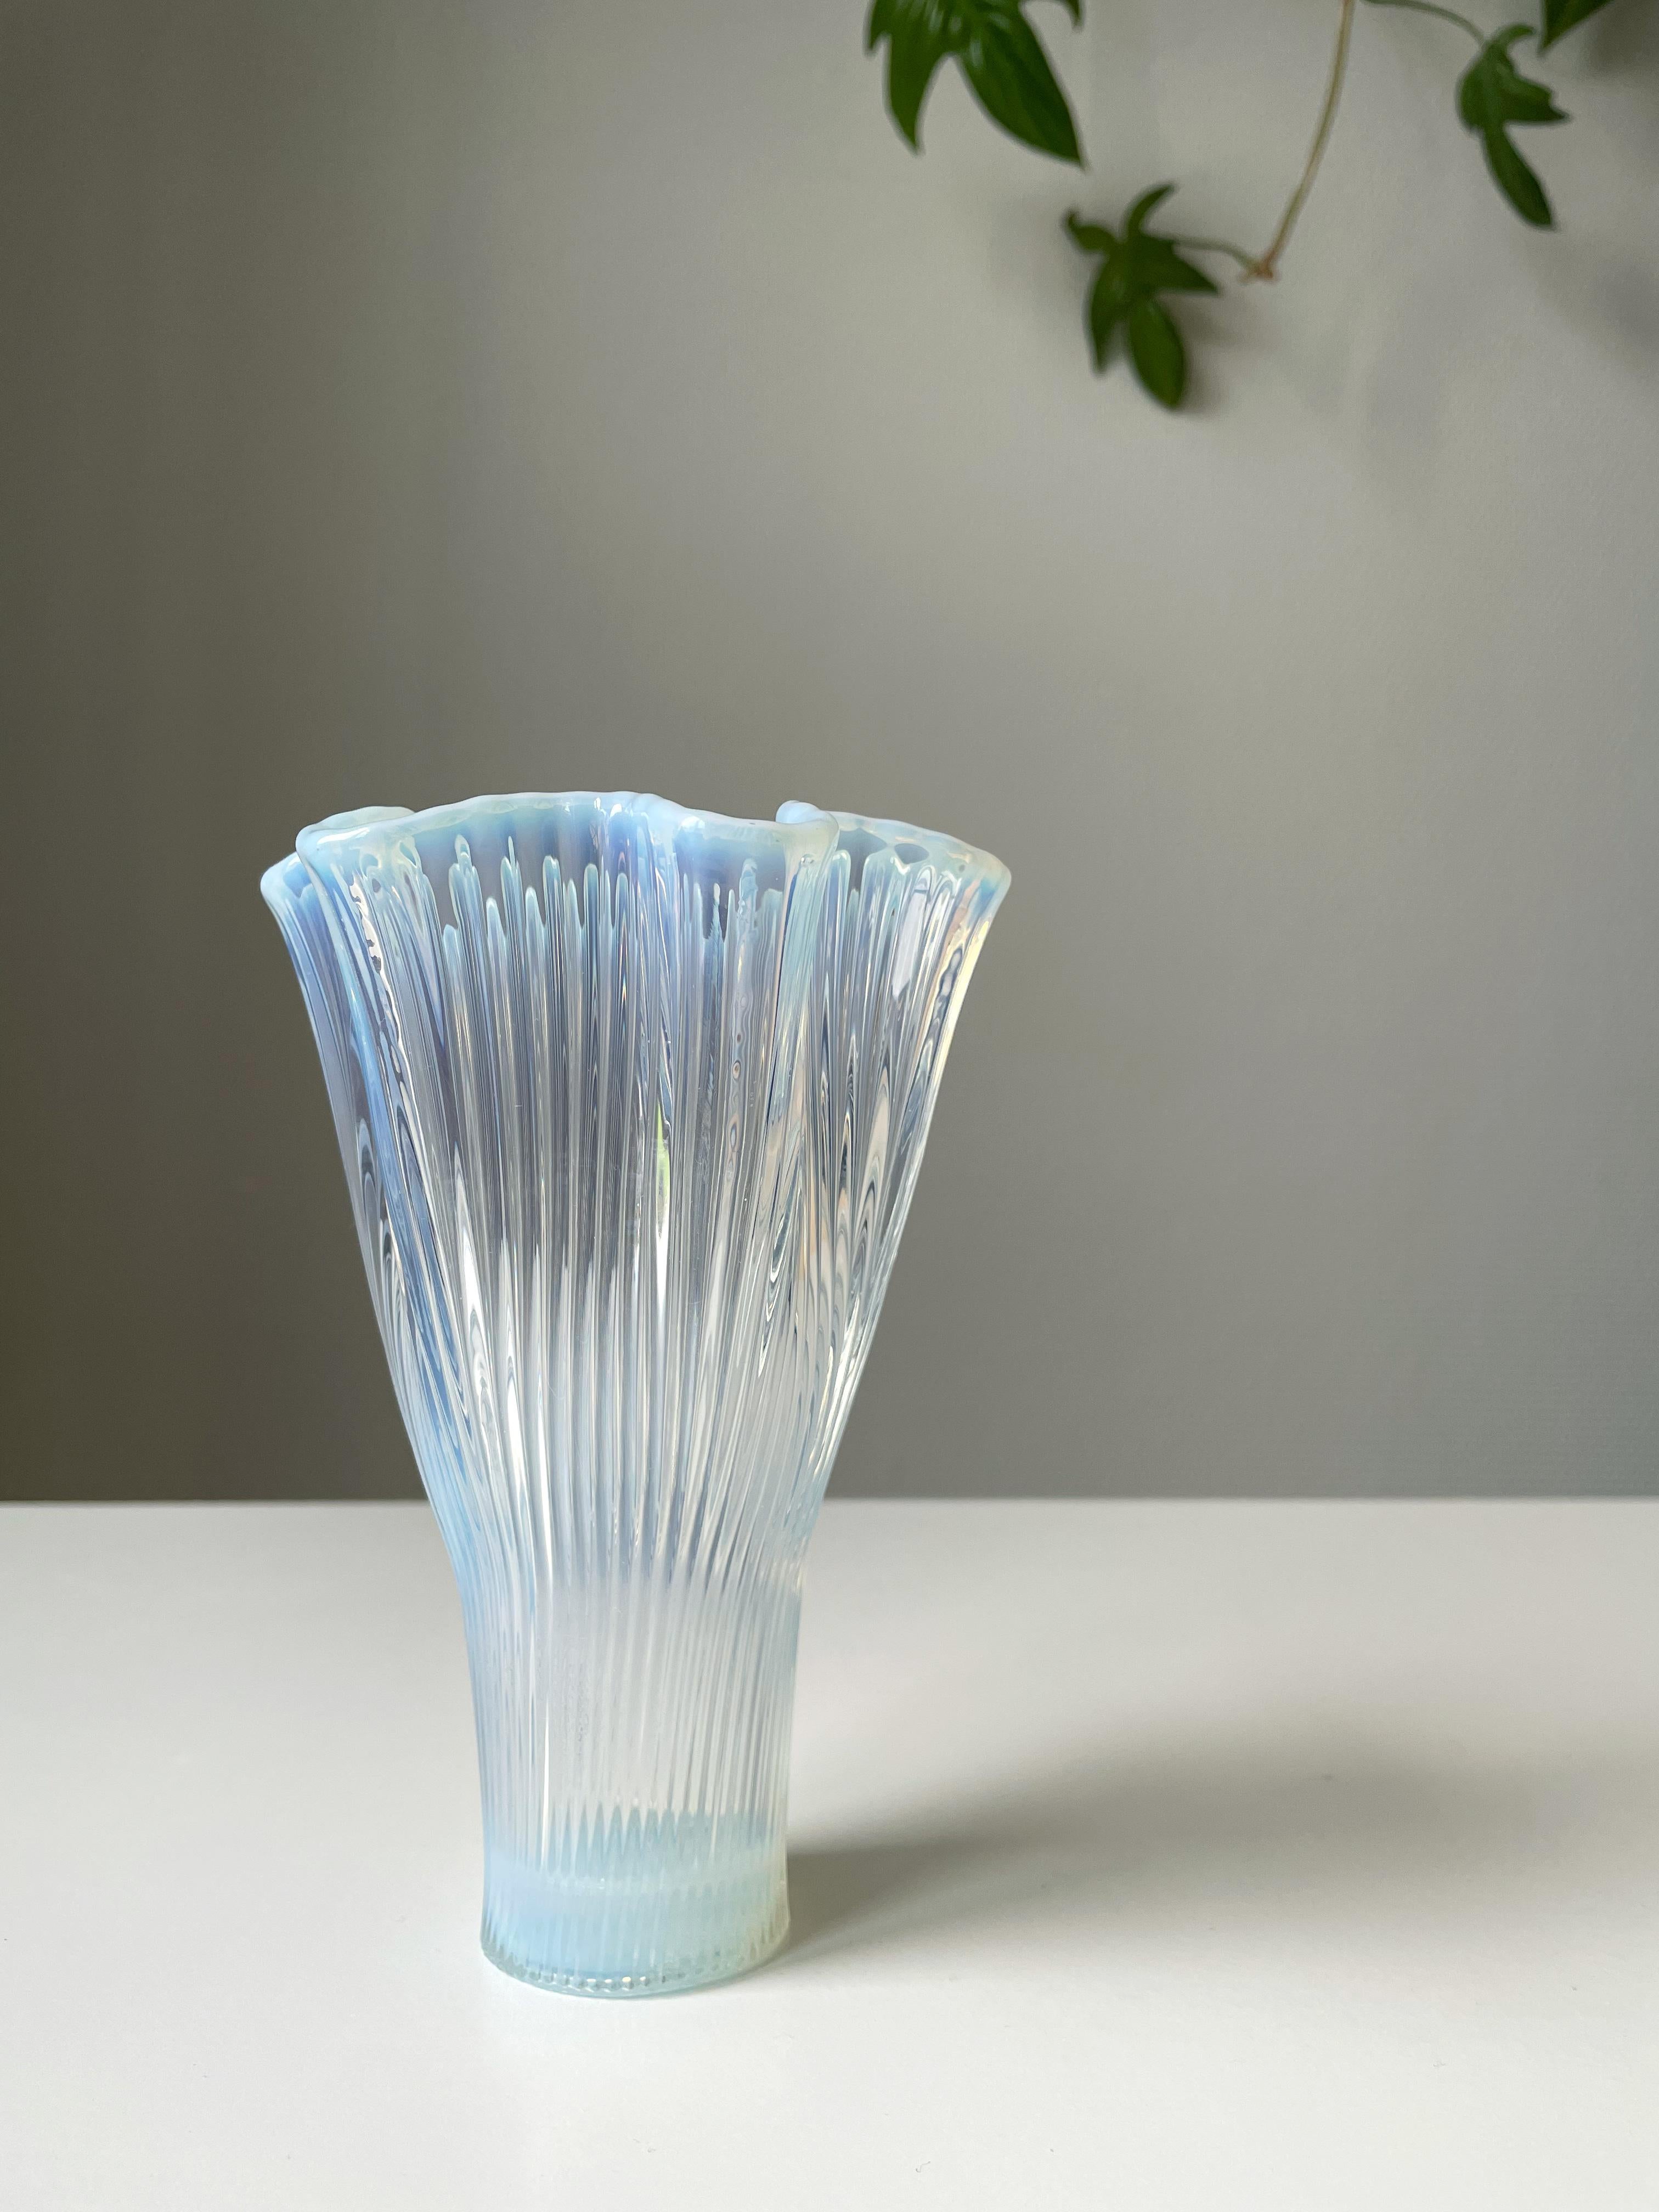 arthur percy vase